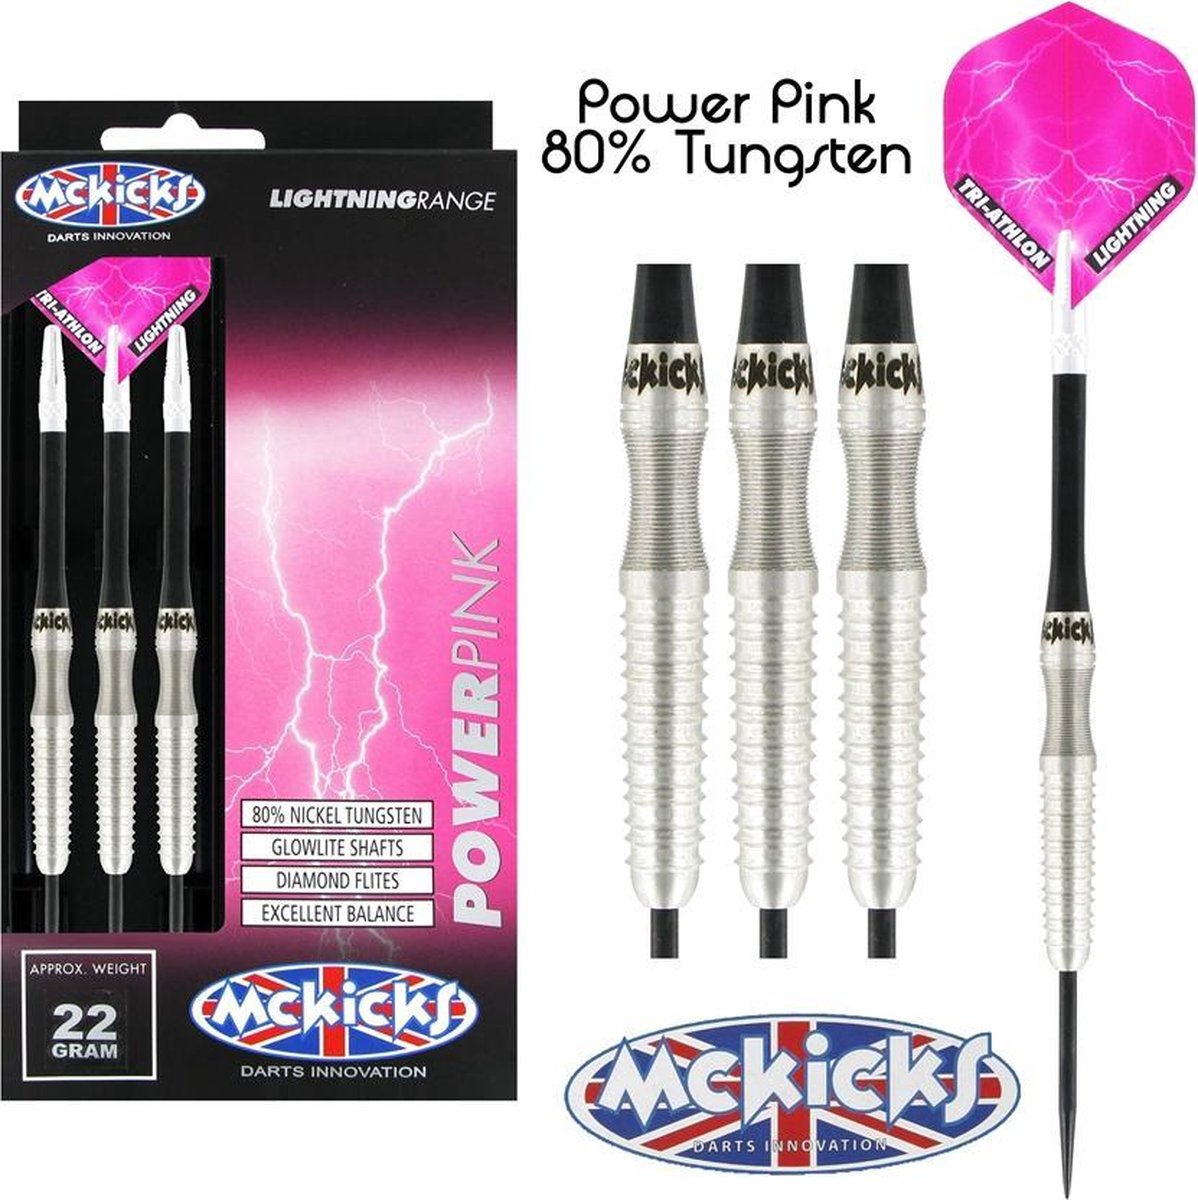 McKicks Power Pink 80% - 26 gram